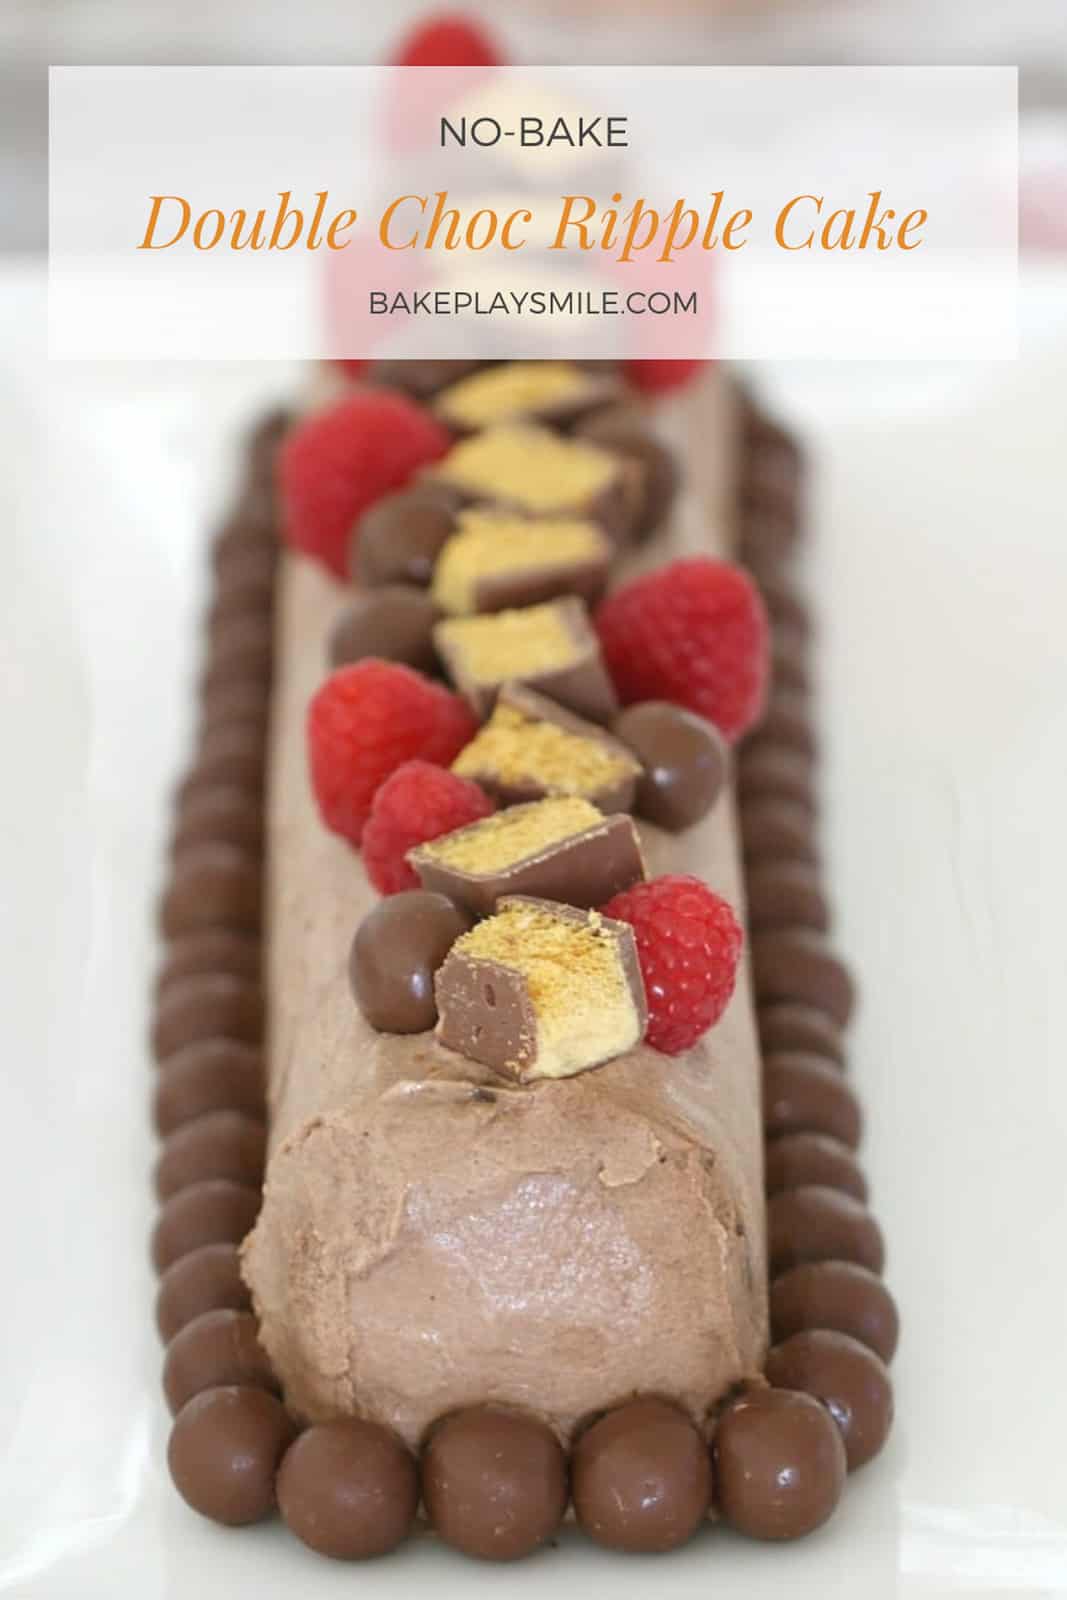 A rectangular log of chocolate ripple cake decorated with chocolate whipped cream, raspberries and chocolates.